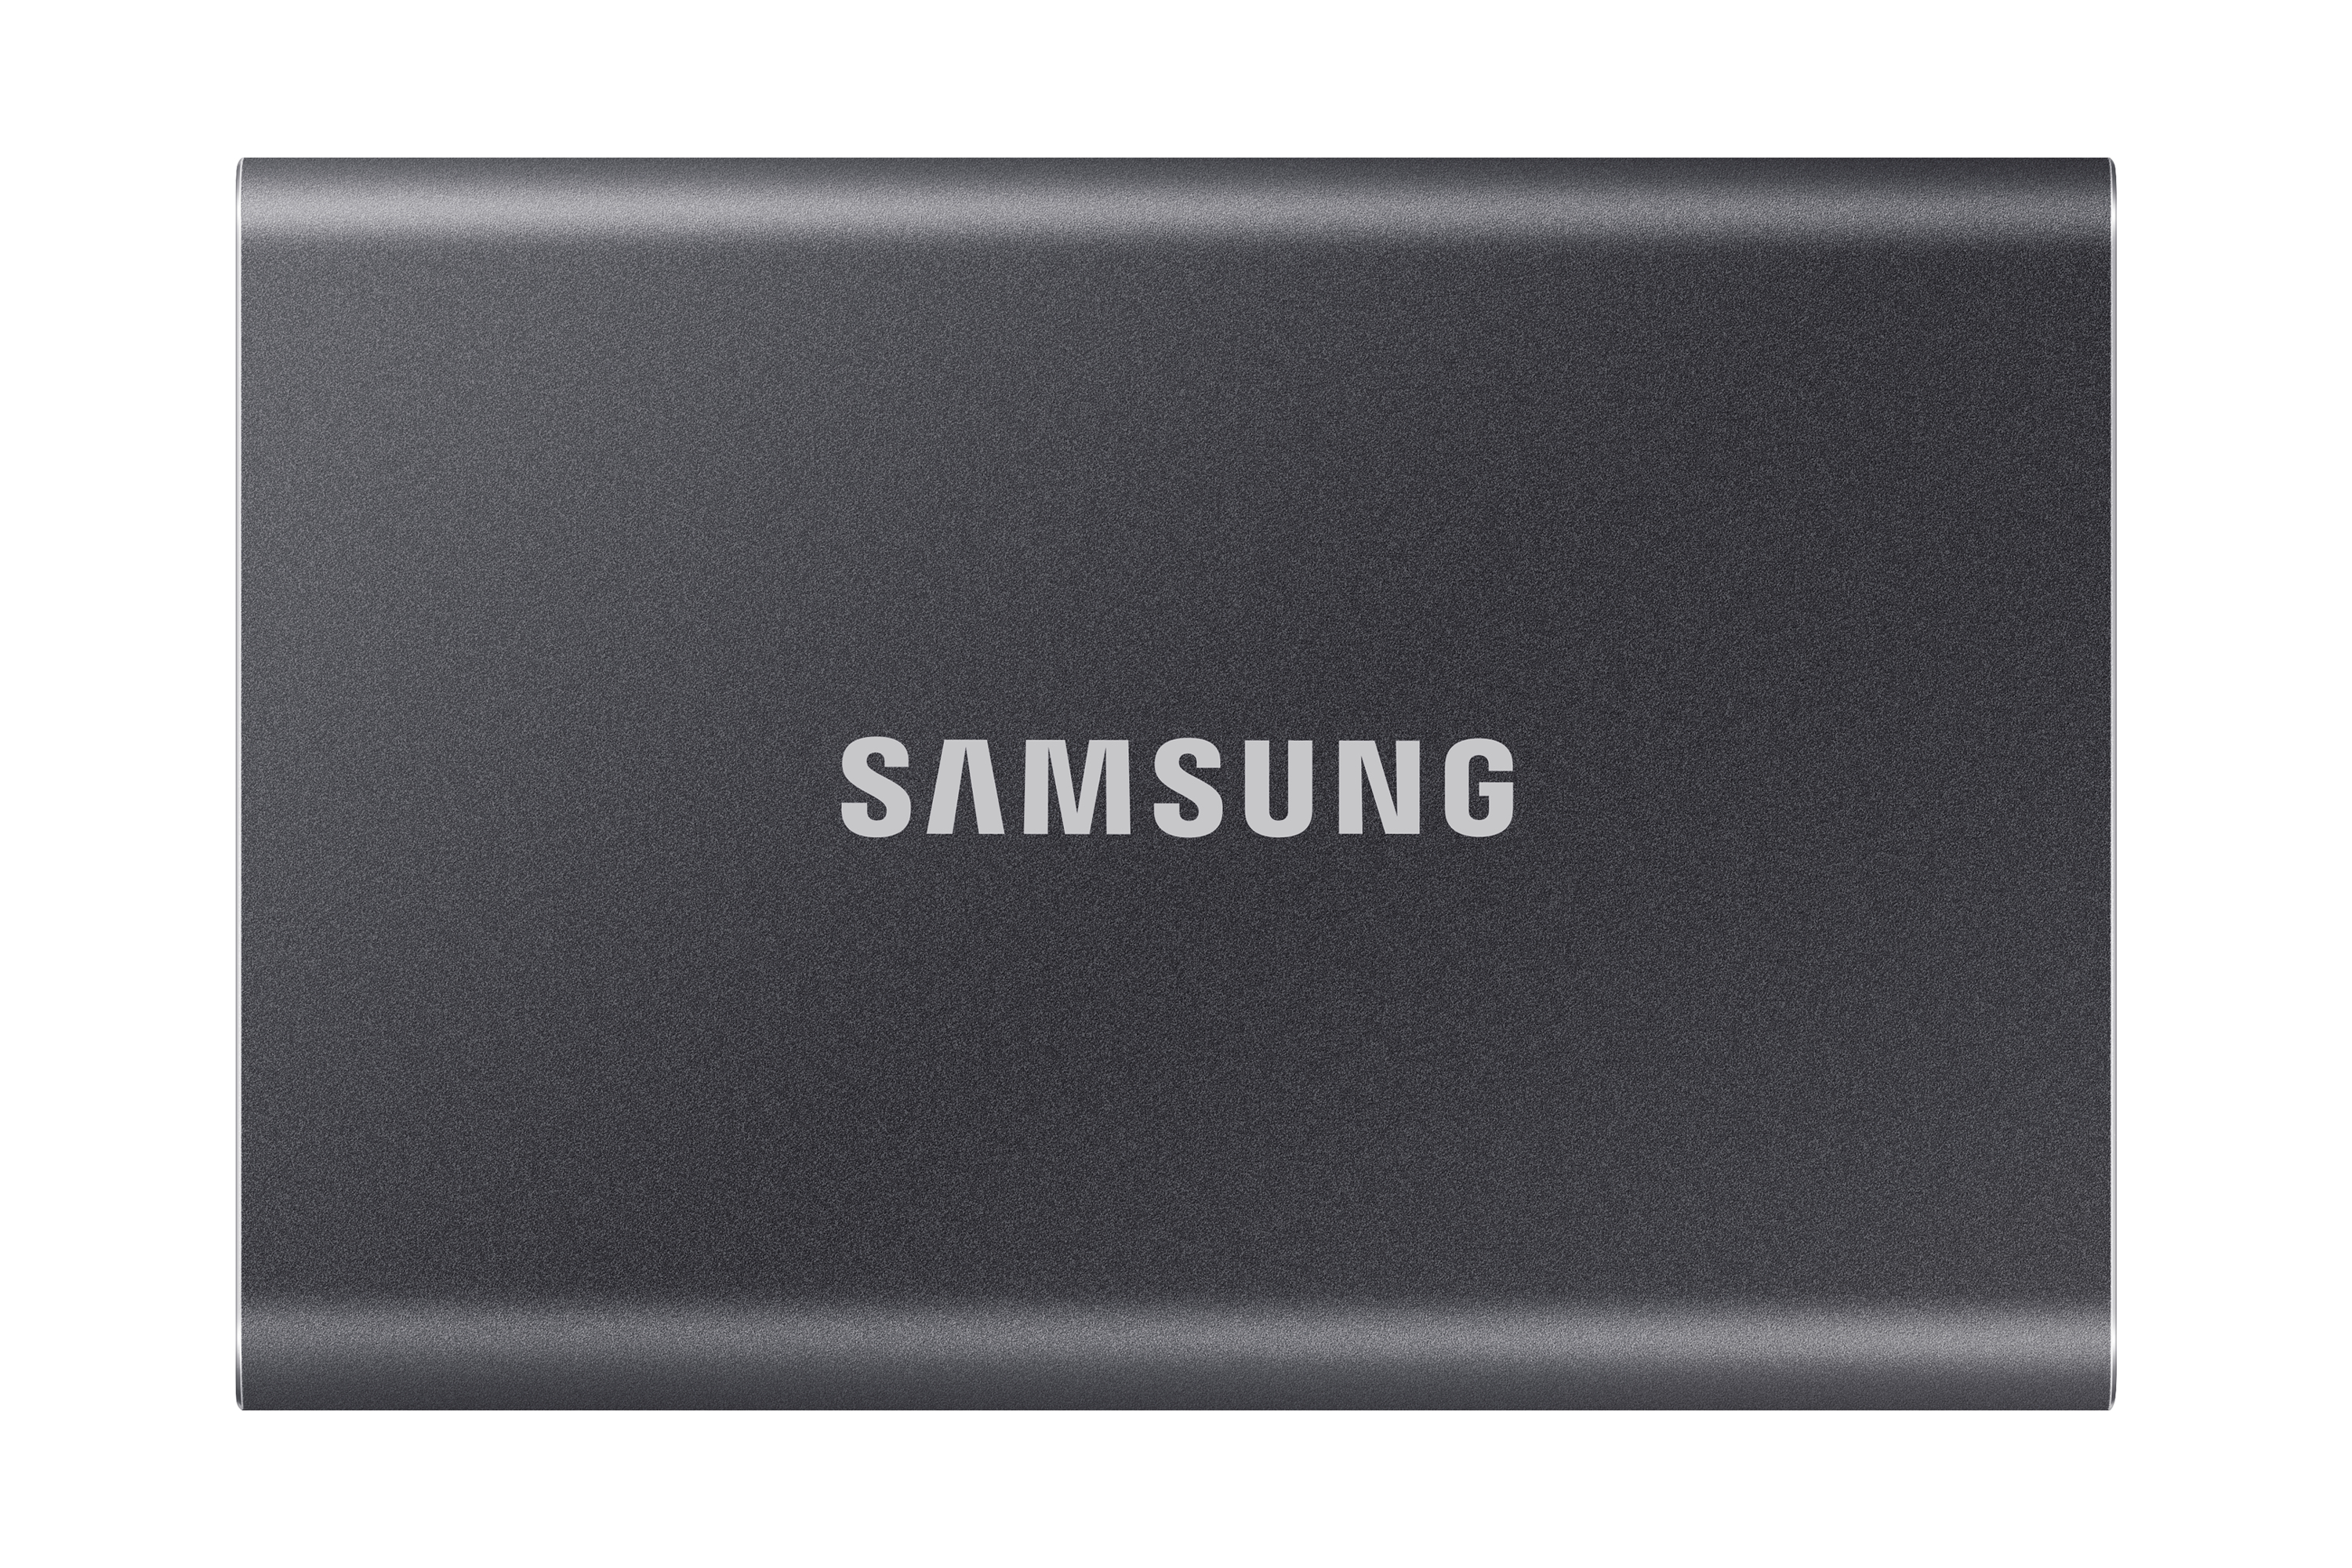 Samsung T7 Portable SSD USB 3.2 1TB Gray